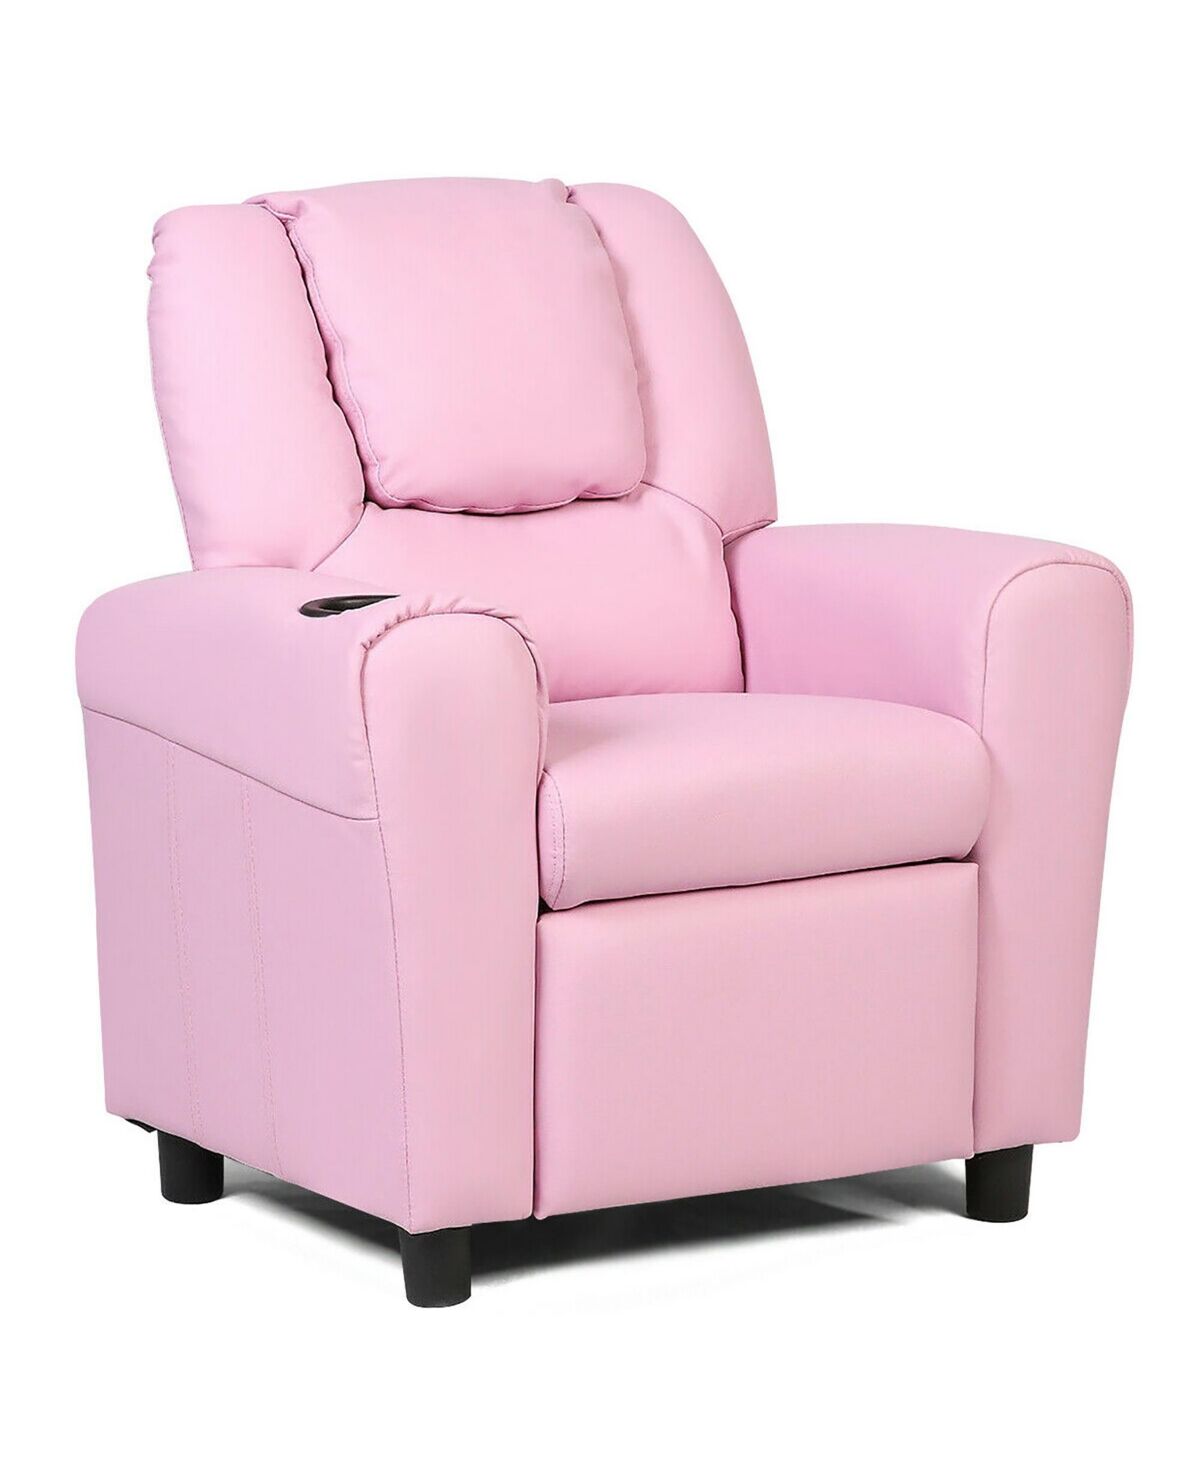 Costway Kids Recliner Armchair Children's Furniture Sofa Couch Chair - Pink